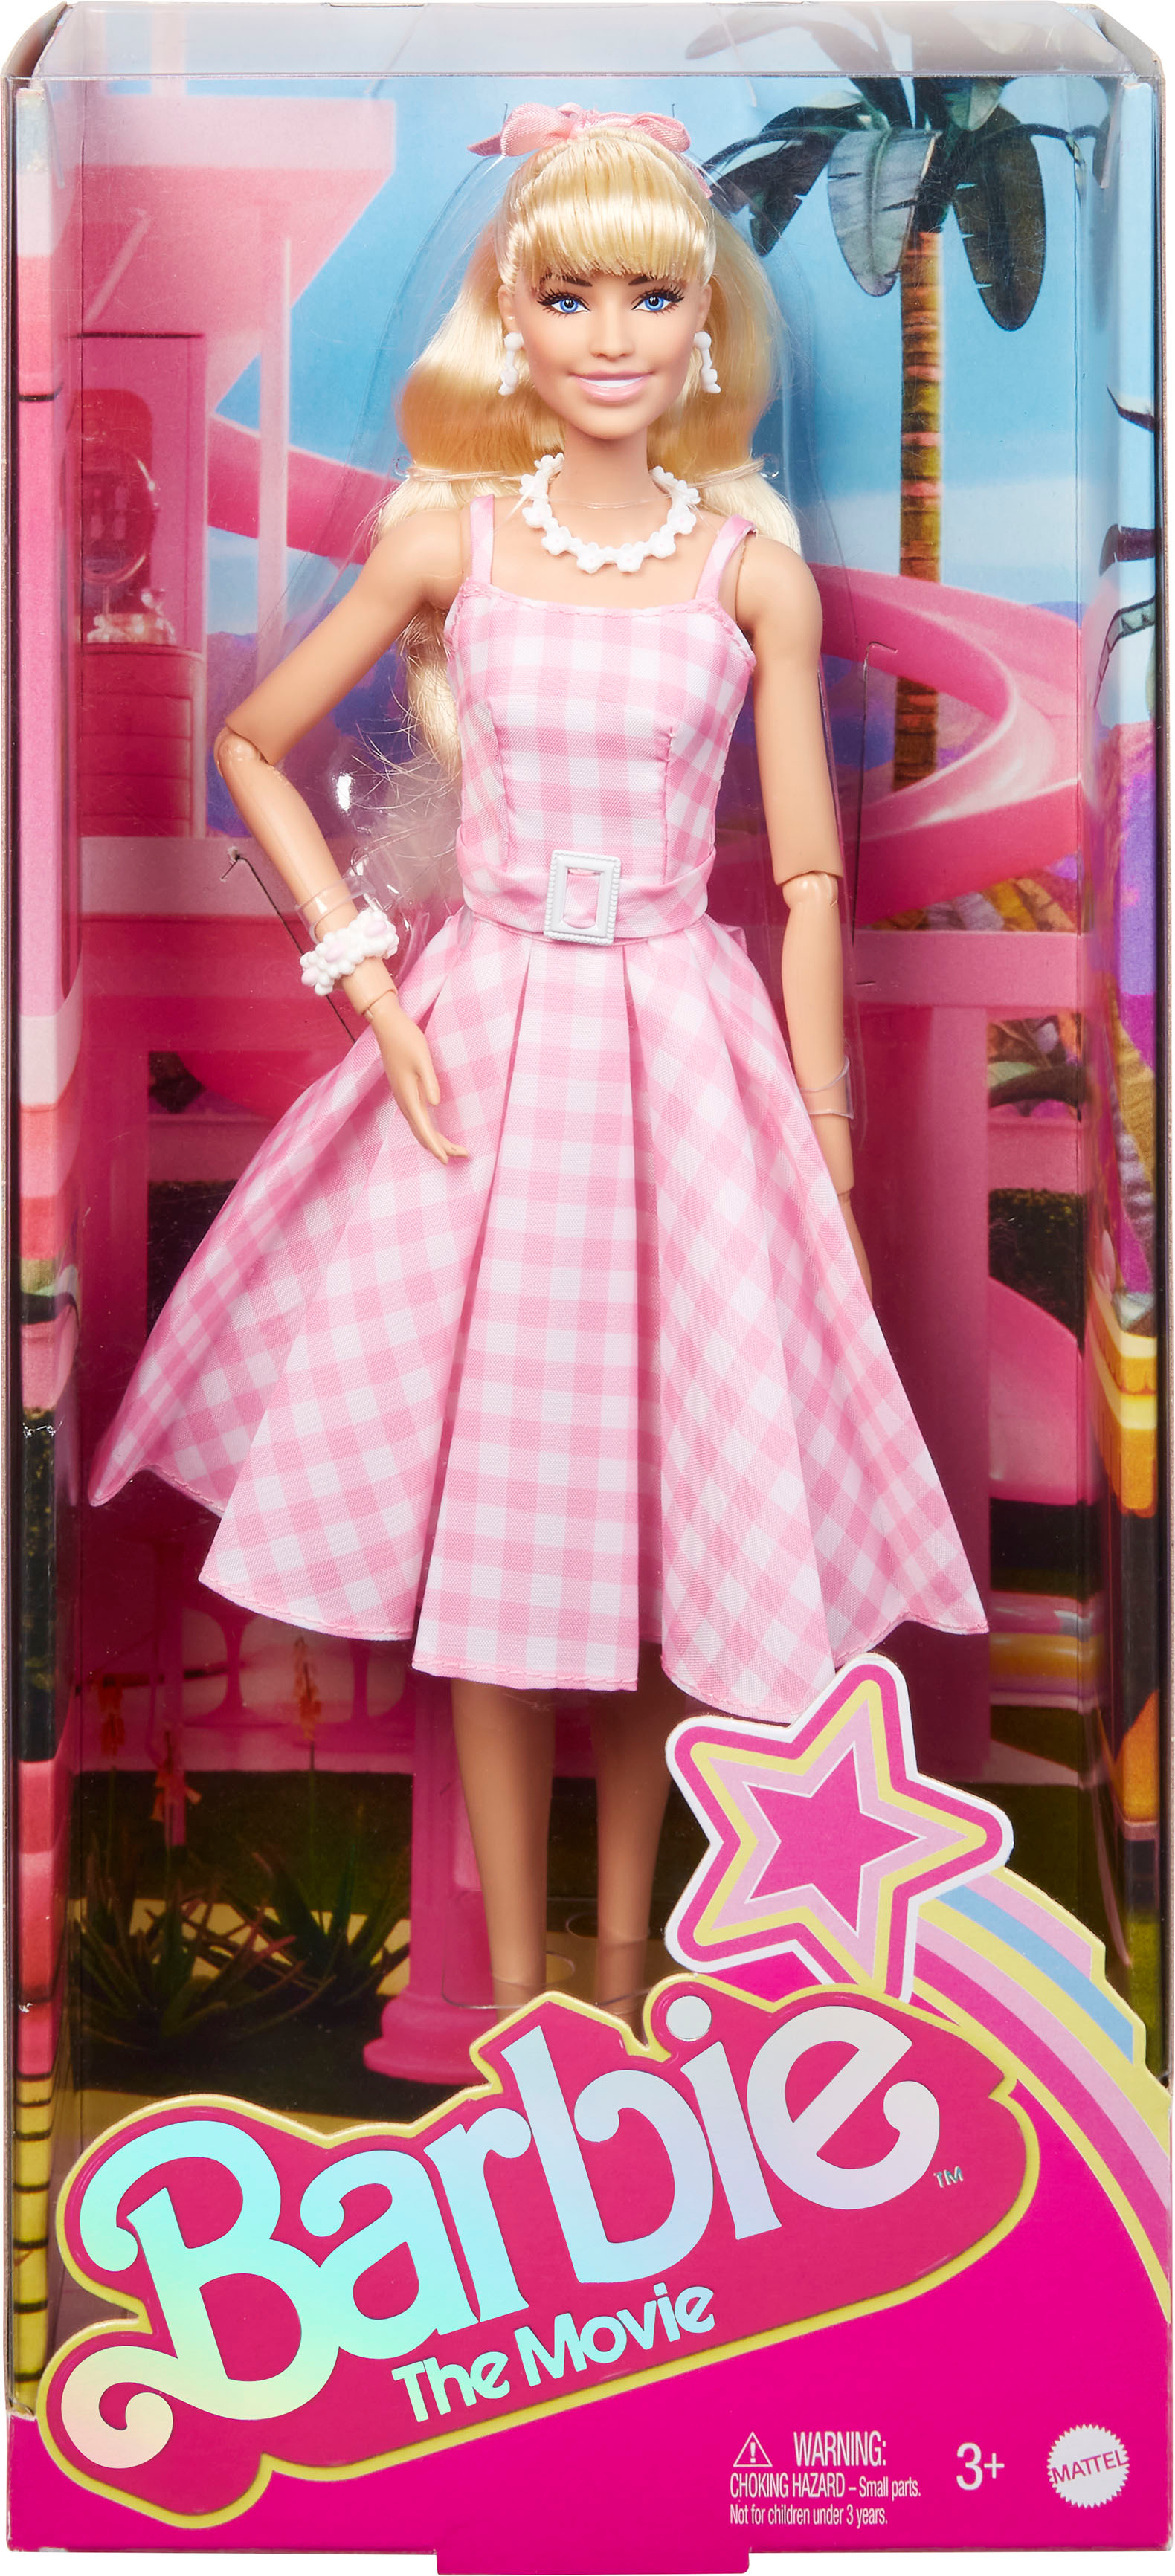 Adult Gingham Dress - Barbie the Movie 